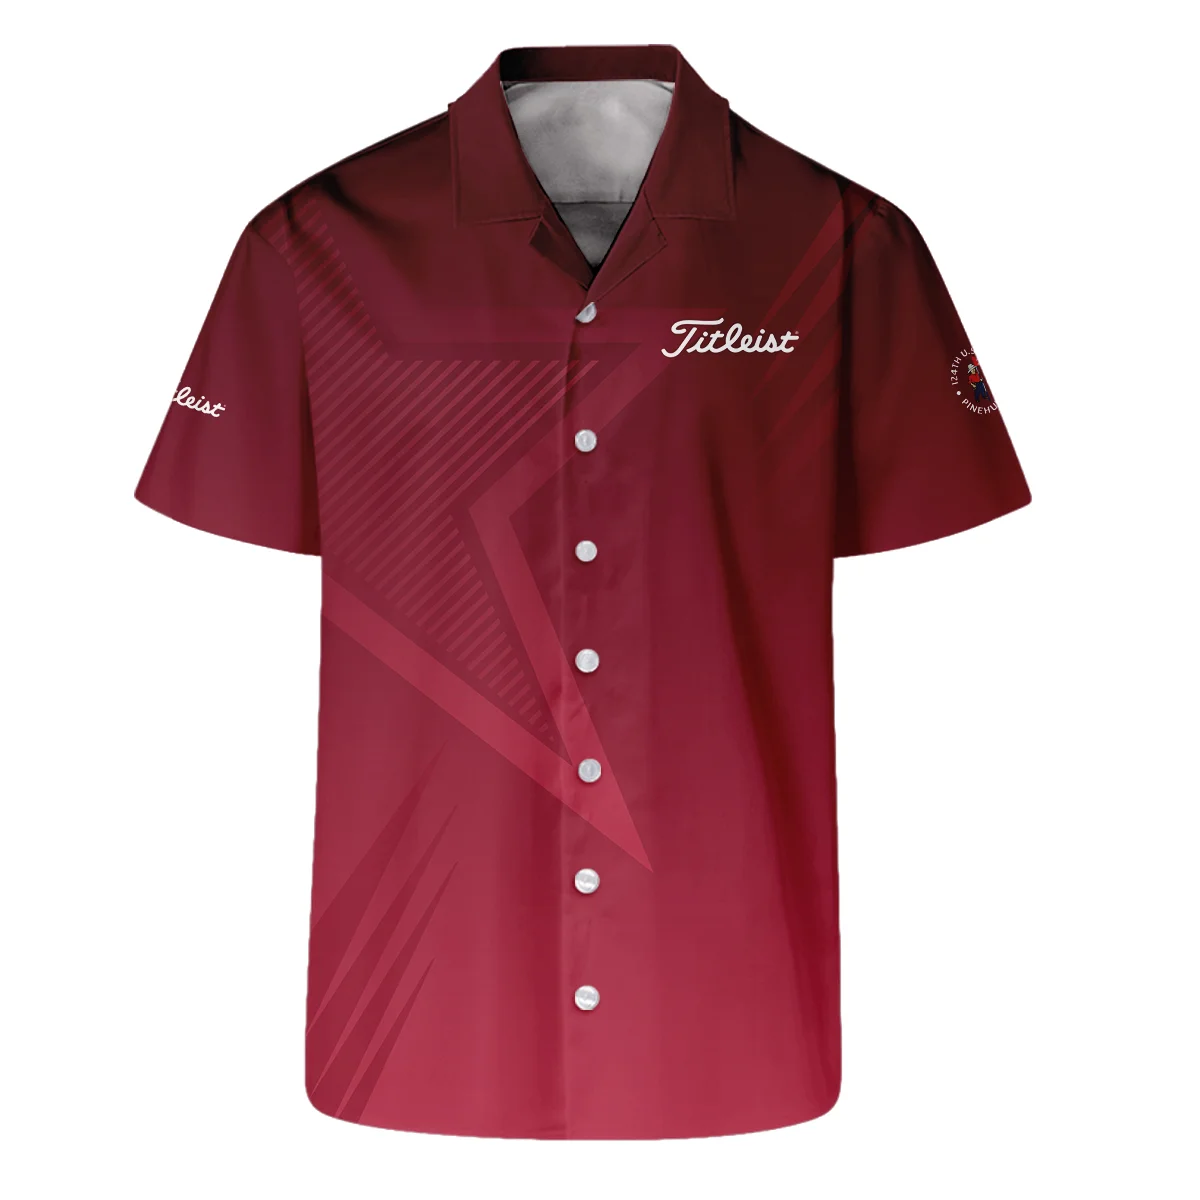 Titleist 124th U.S. Open Pinehurst Golf Sport Bomber Jacket Star Gradient Red Straight Pattern Bomber Jacket